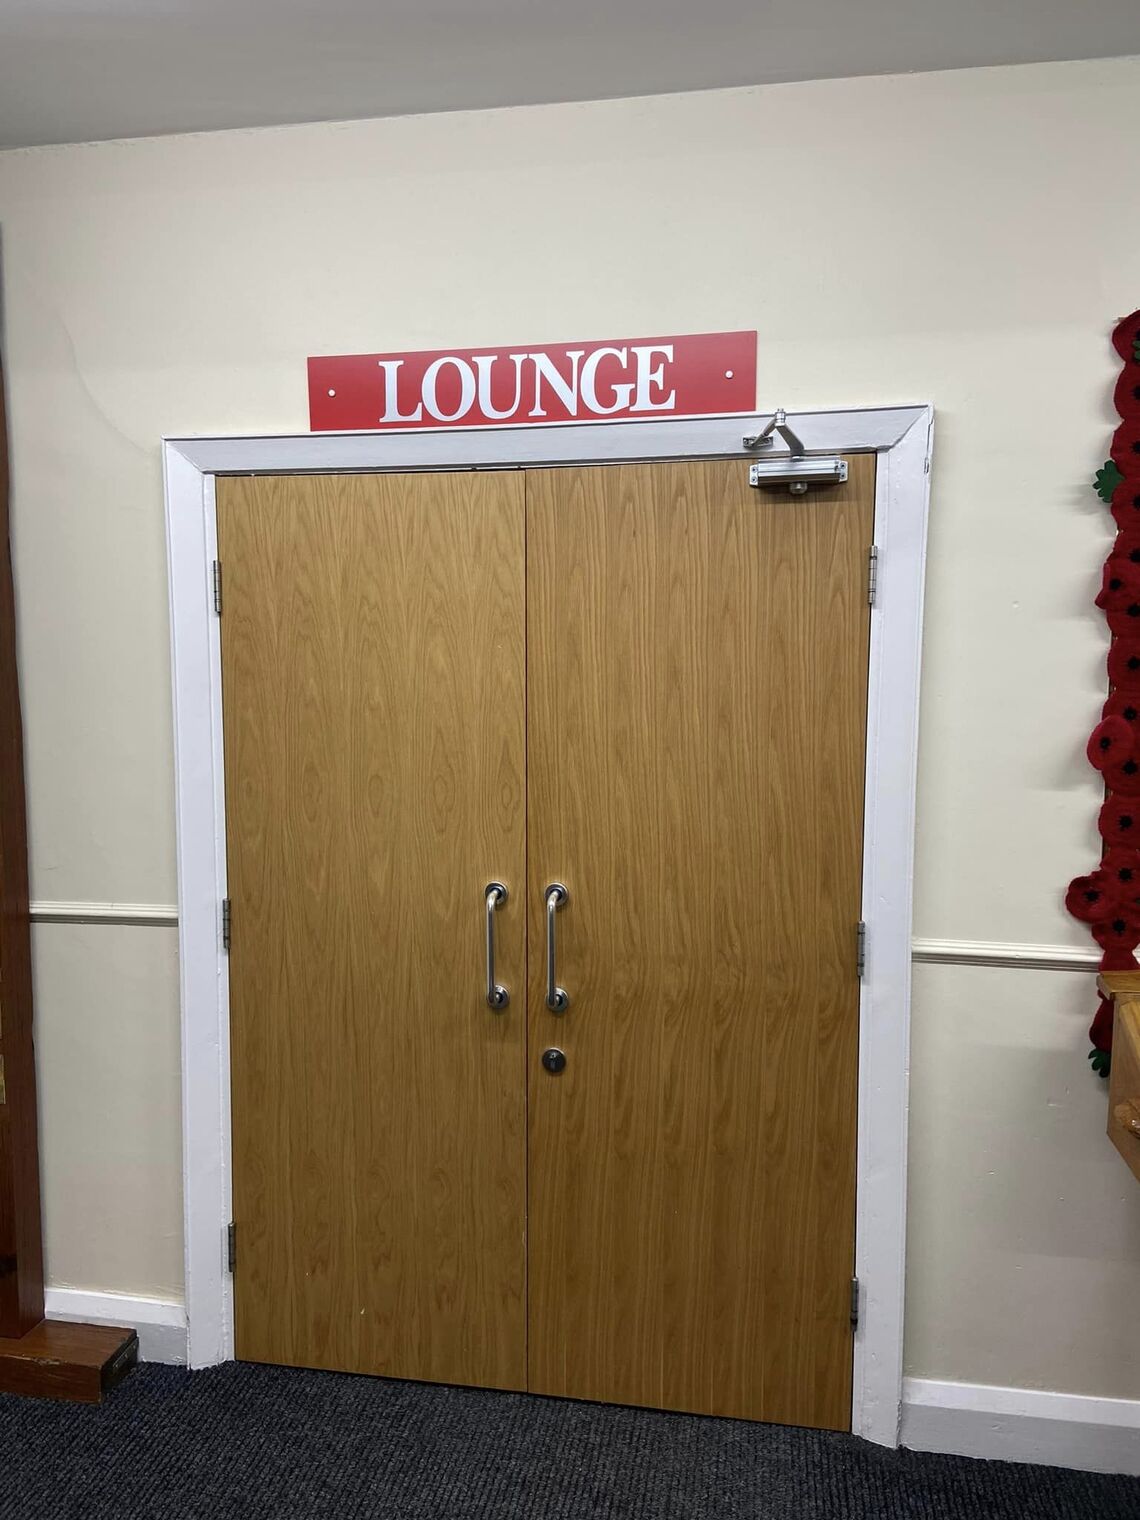 Lounge.jpg